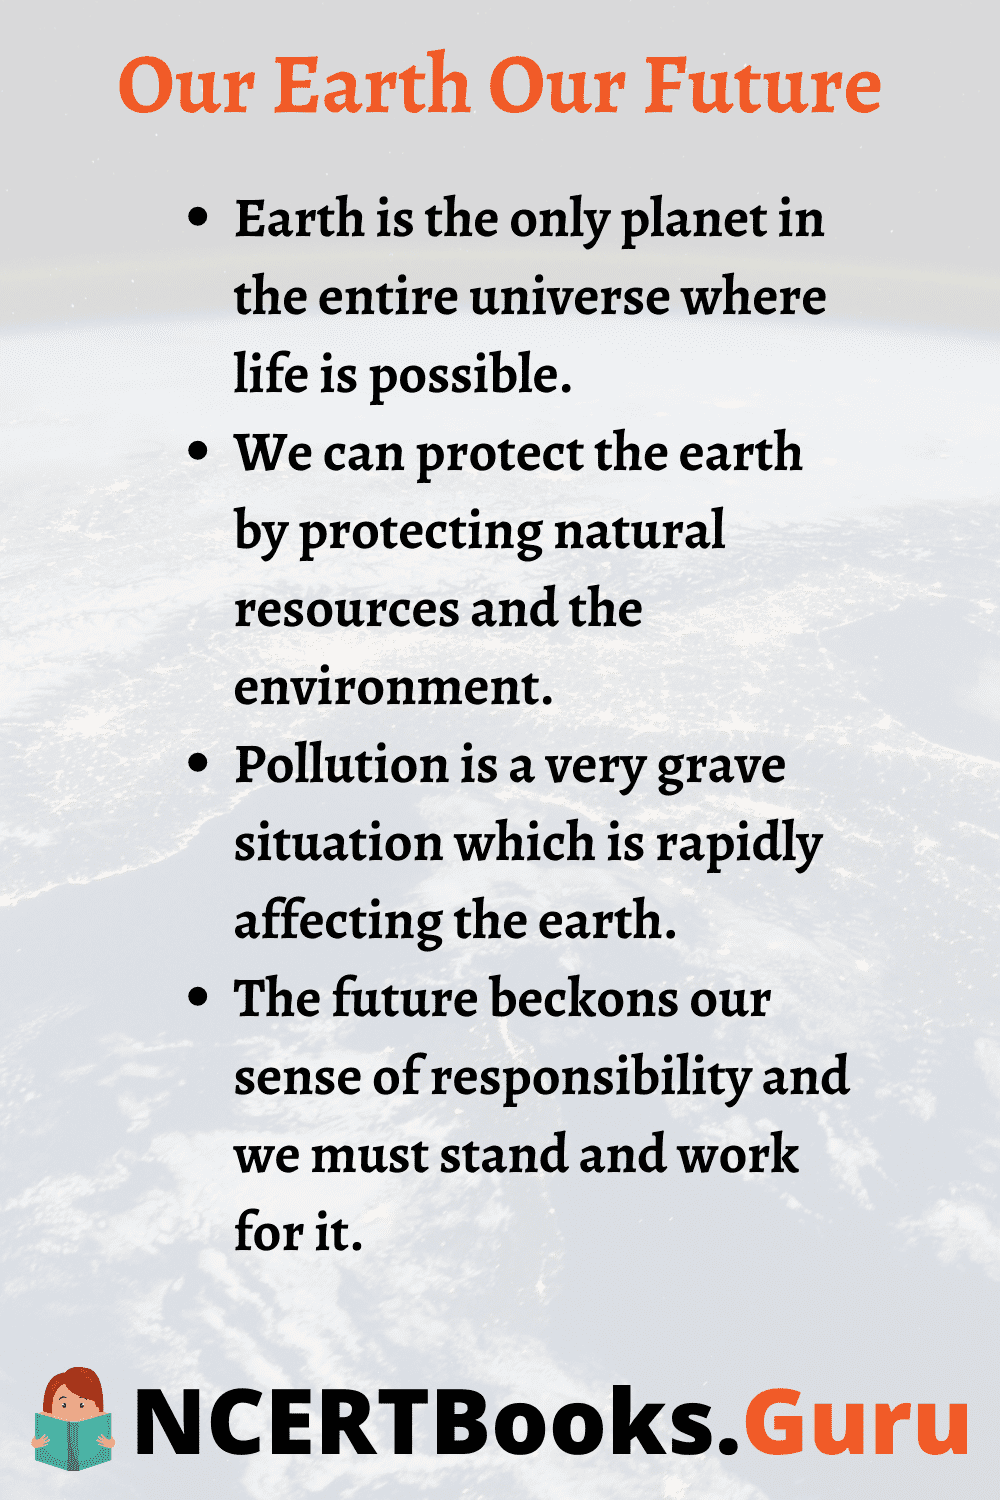 future earth essay